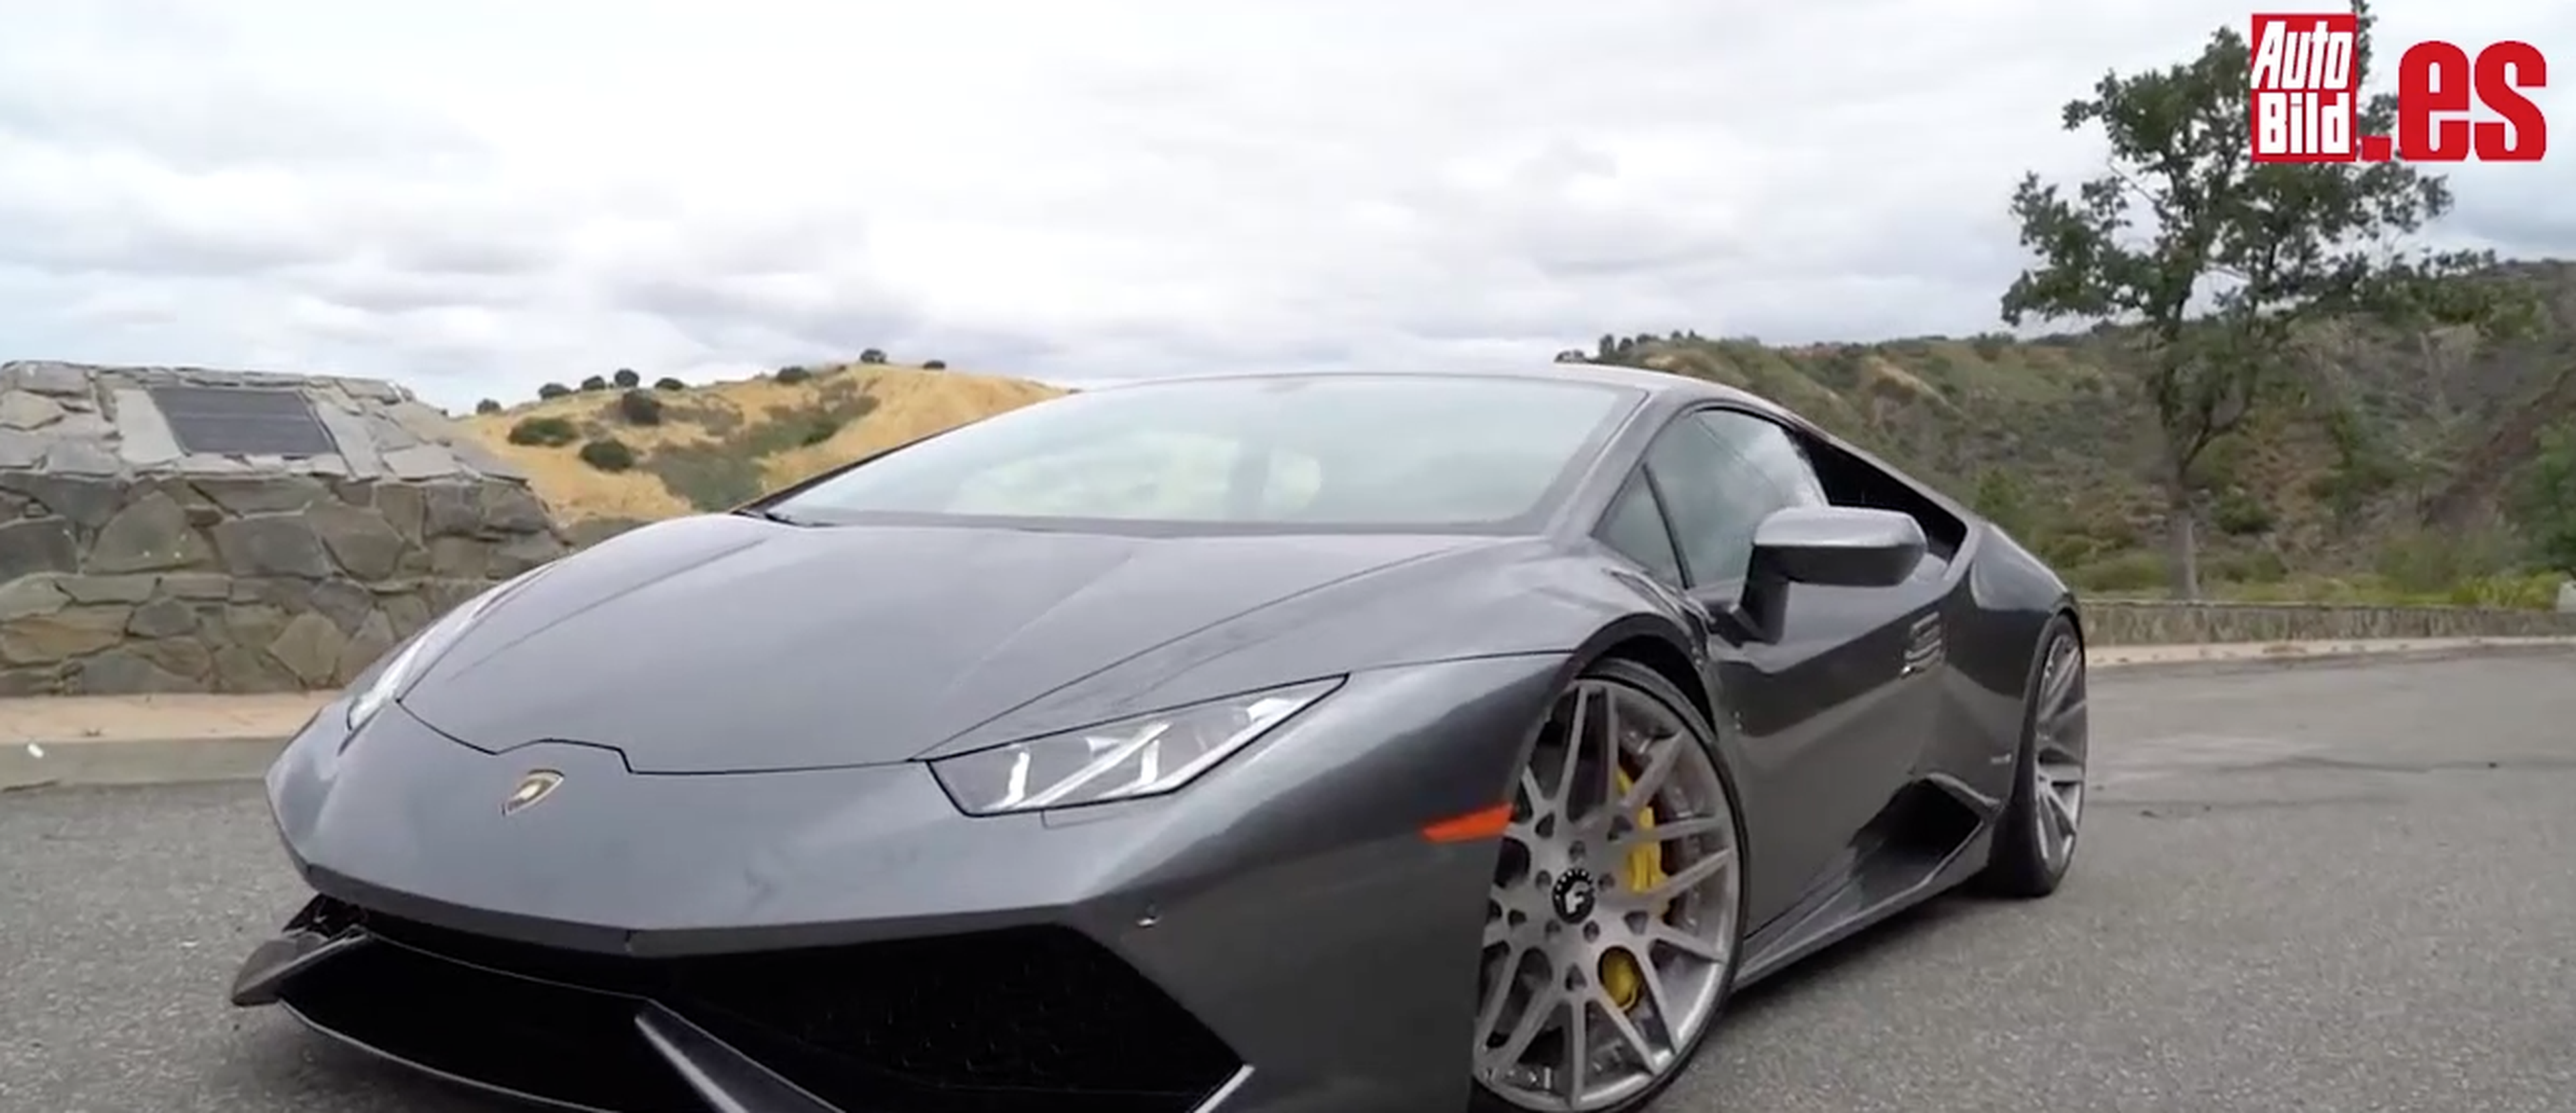 VÍDEO: ¡Se salen! Cómo molan las llantas de este Lamborghini Huracán